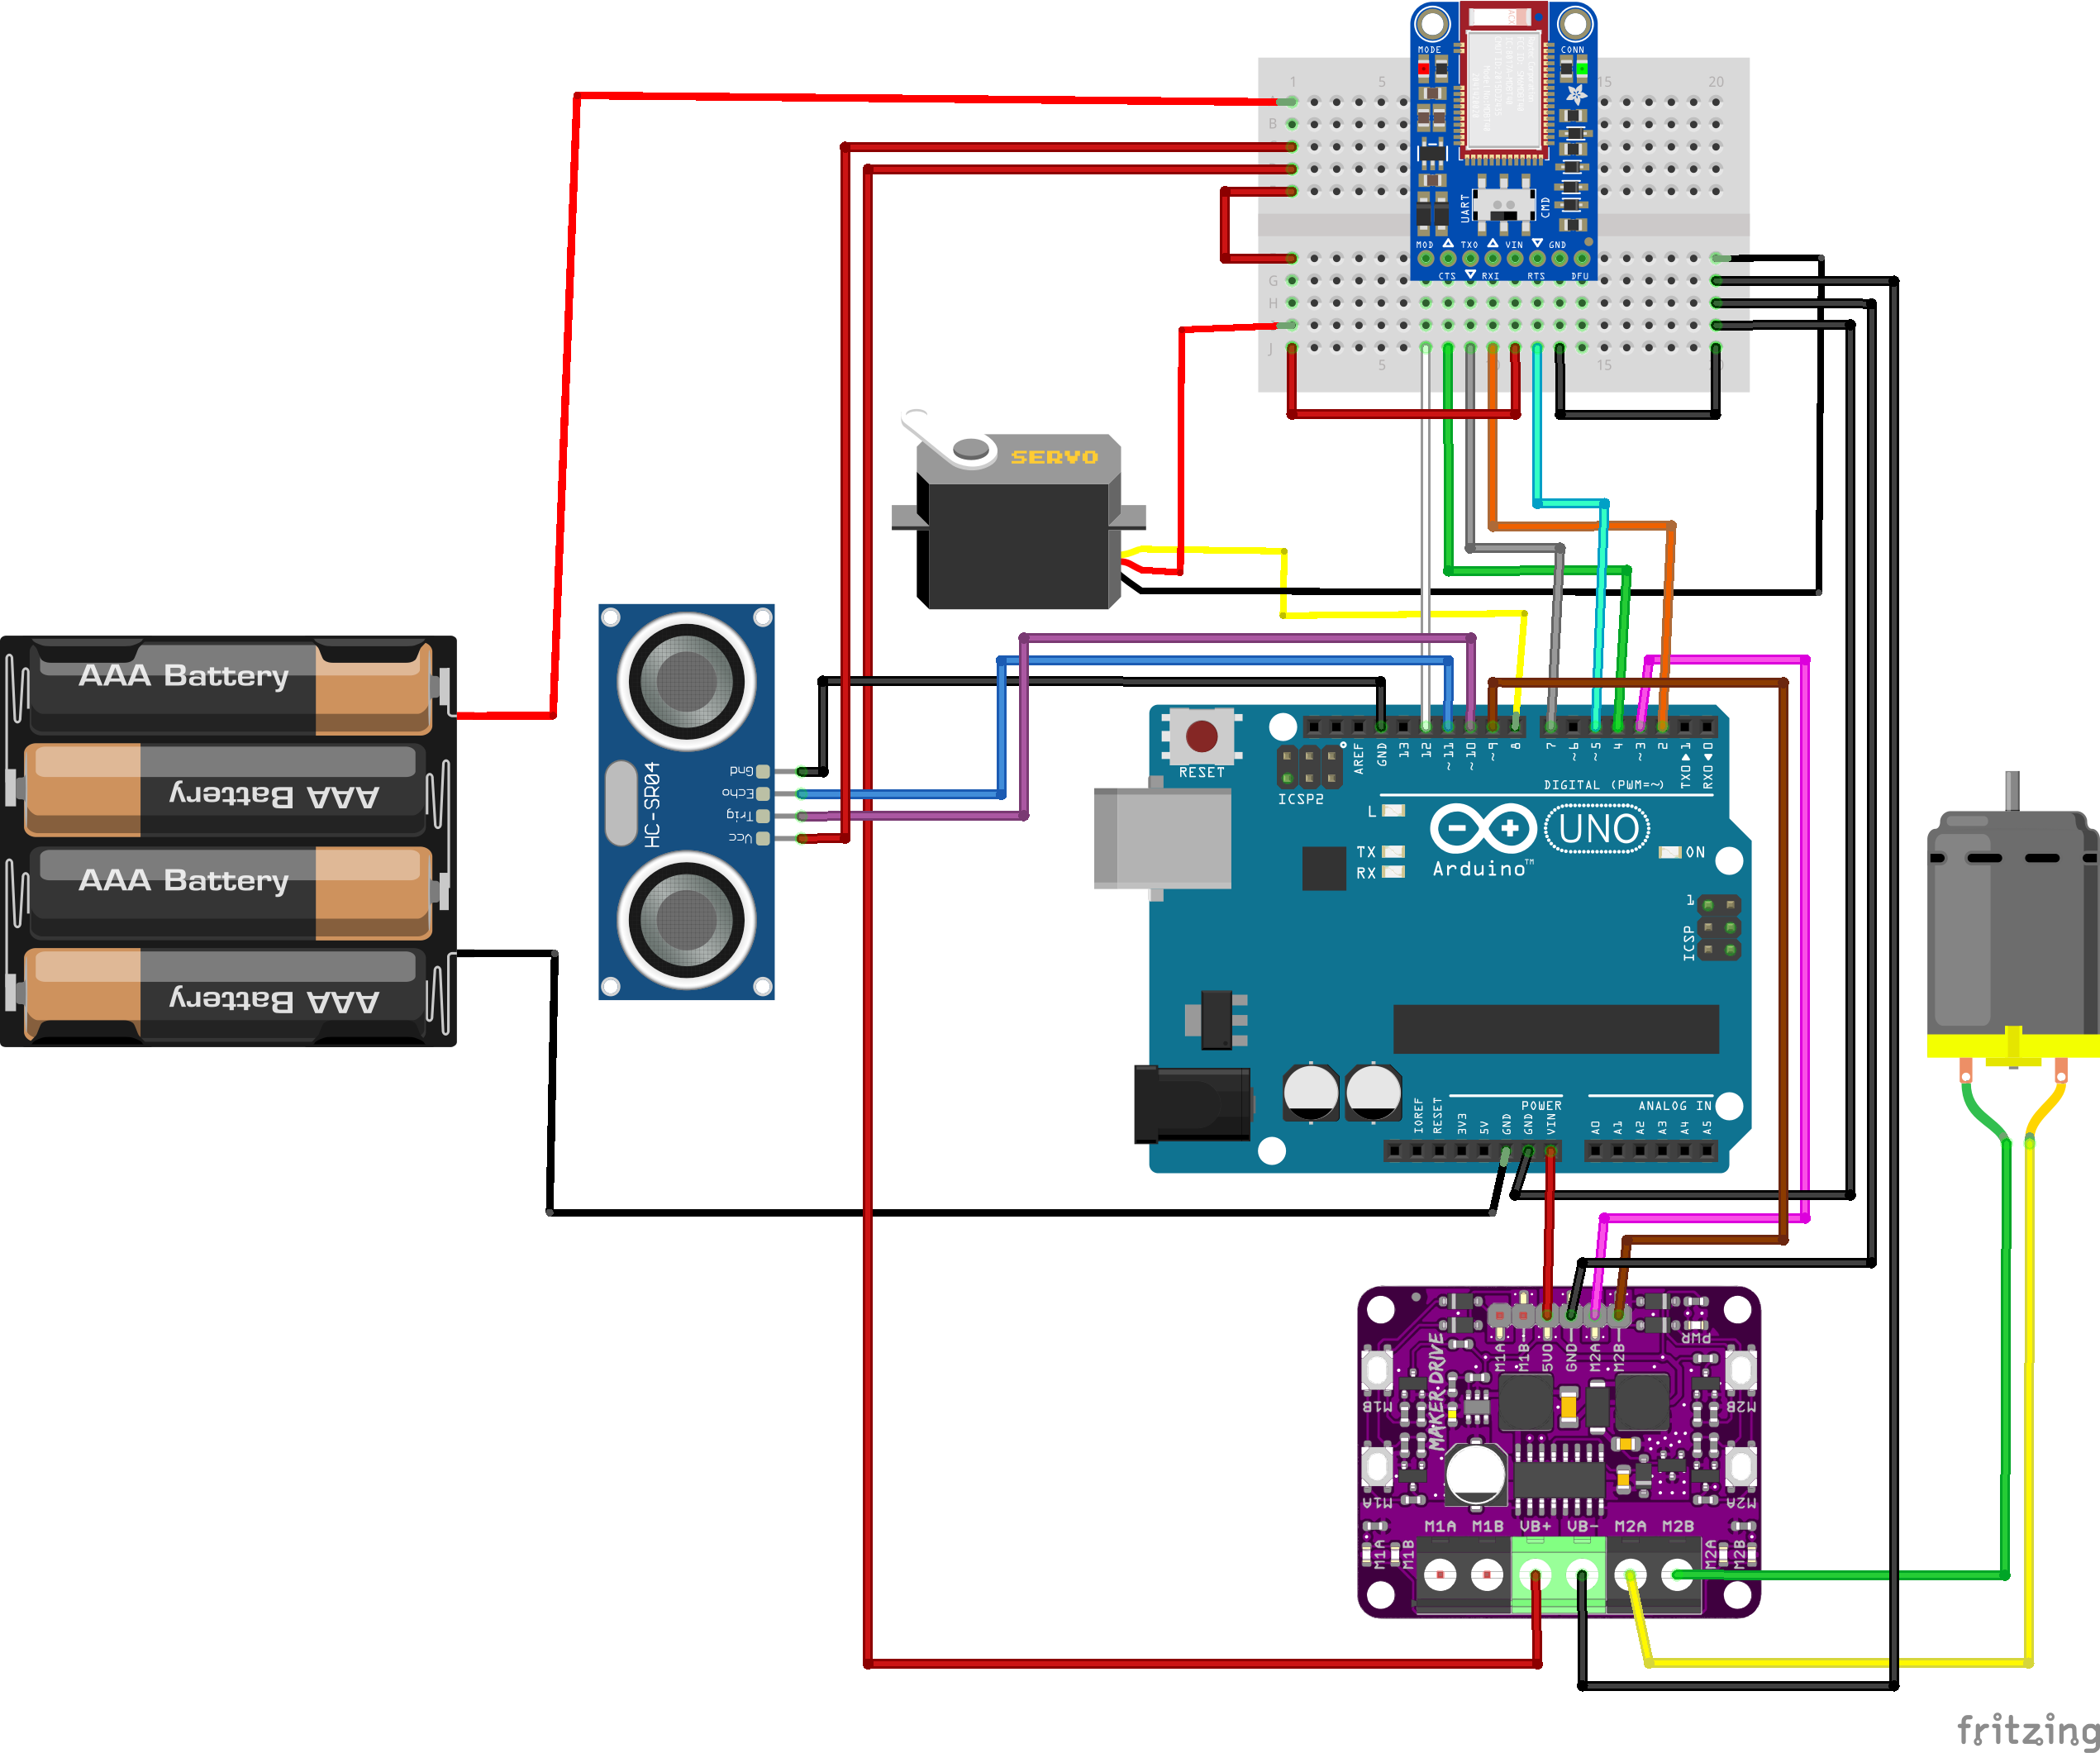 Circuit Diagram using Arduino, Maker Drive, servo motor, DC motor, HC-SR04 distance sensor, and Bluefruit LE UART Friend